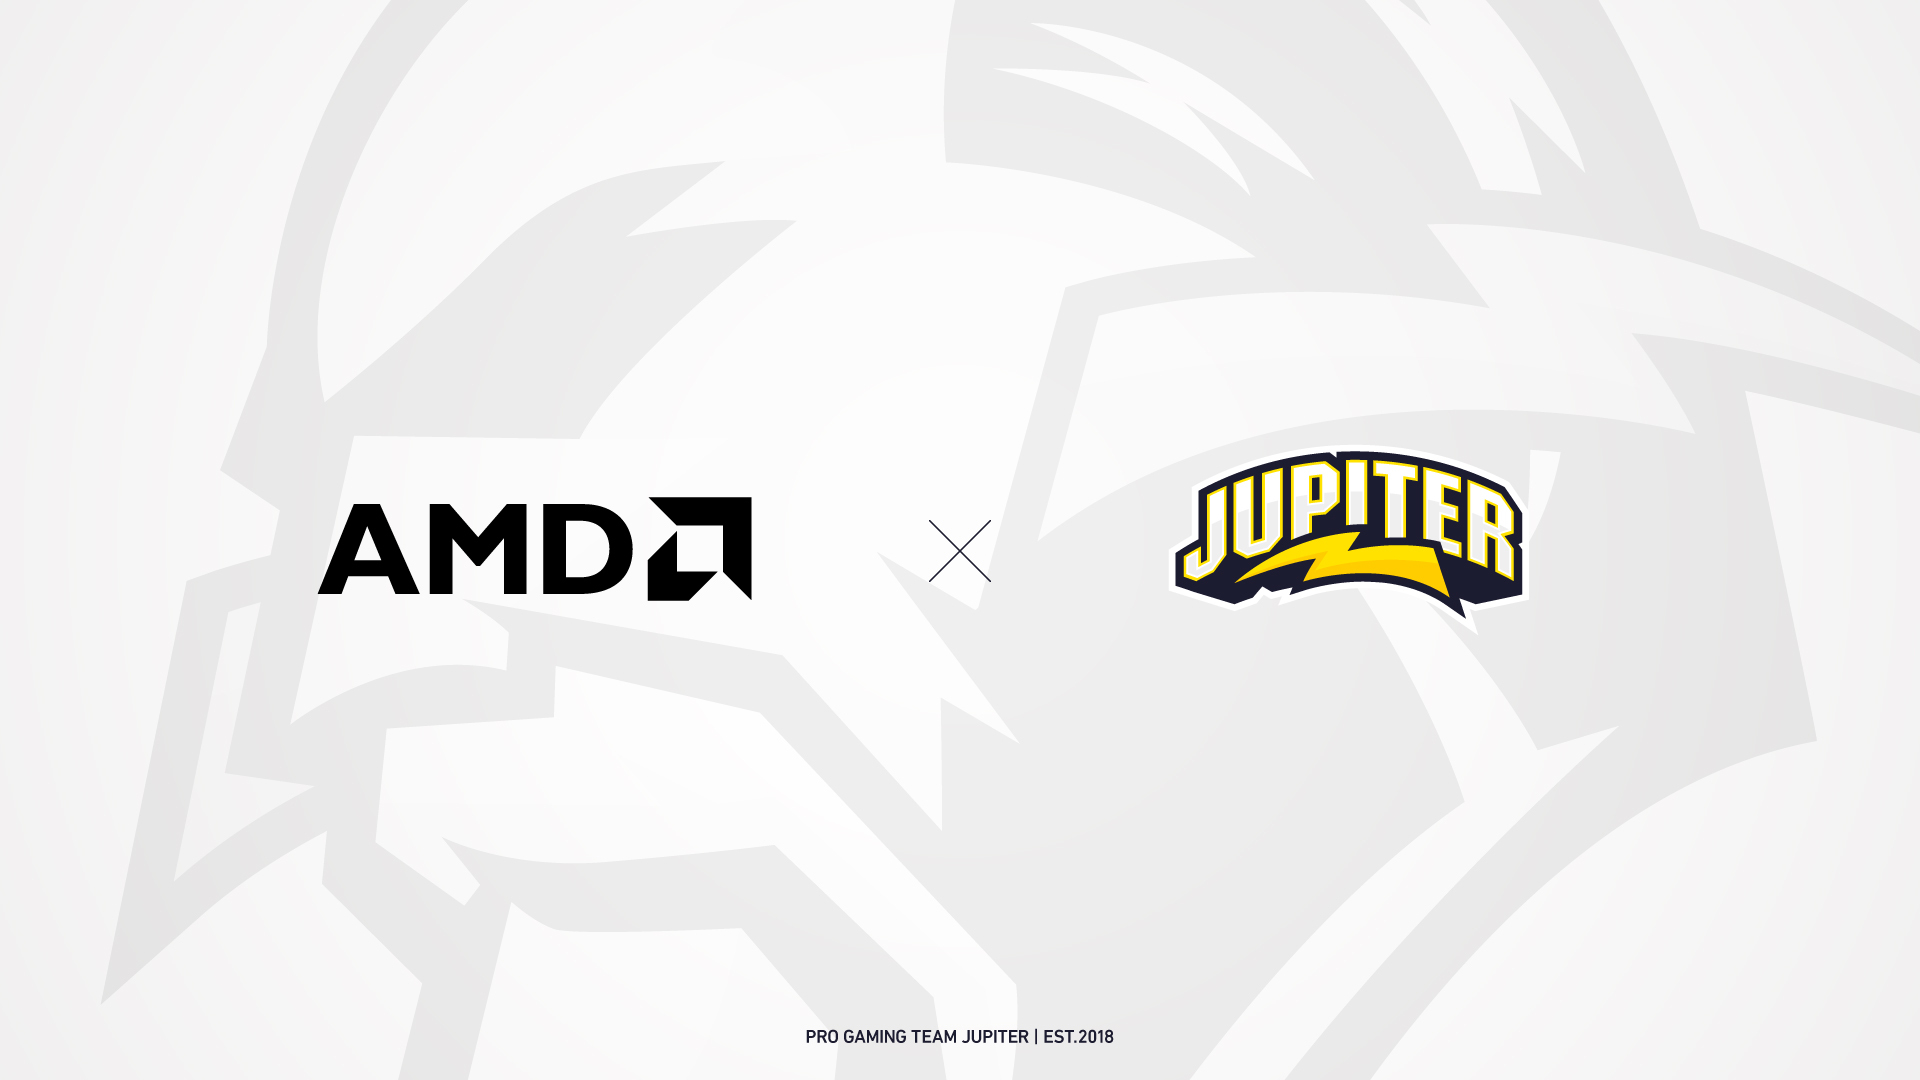 Amd とのスポンサー契約締結のお知らせ Jupiter Professional Gaming Team